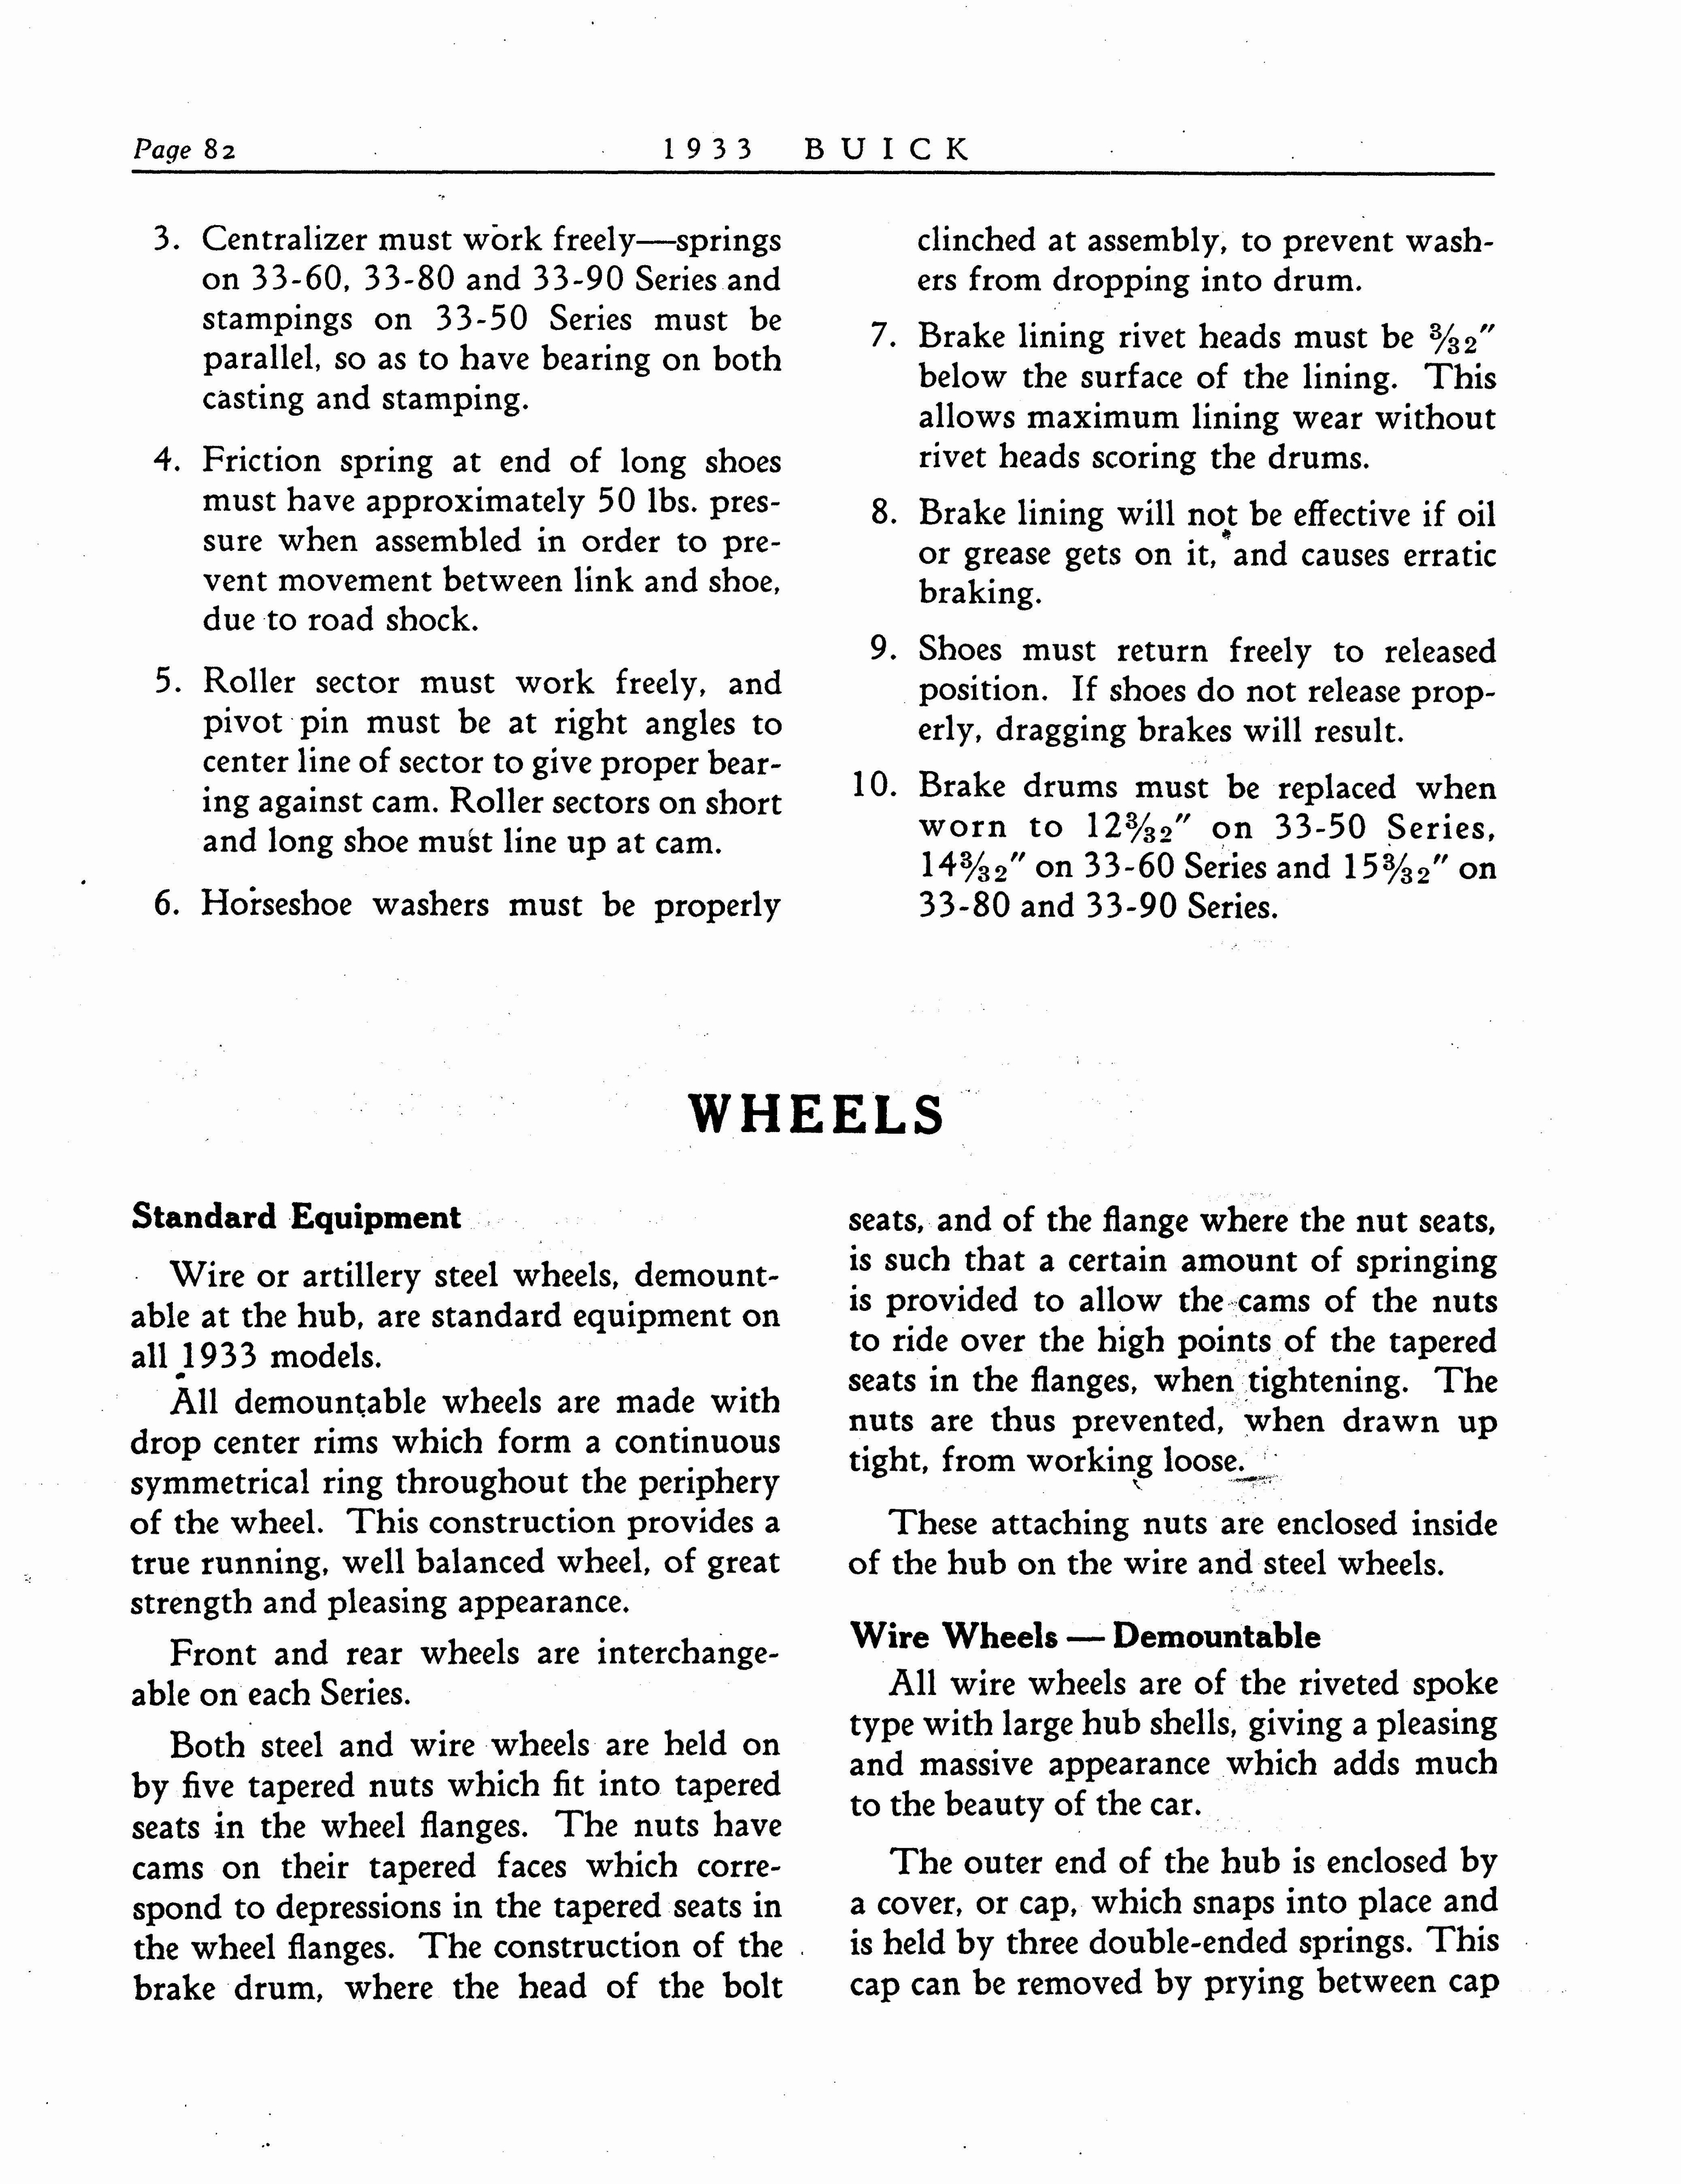 n_1933 Buick Shop Manual_Page_083.jpg